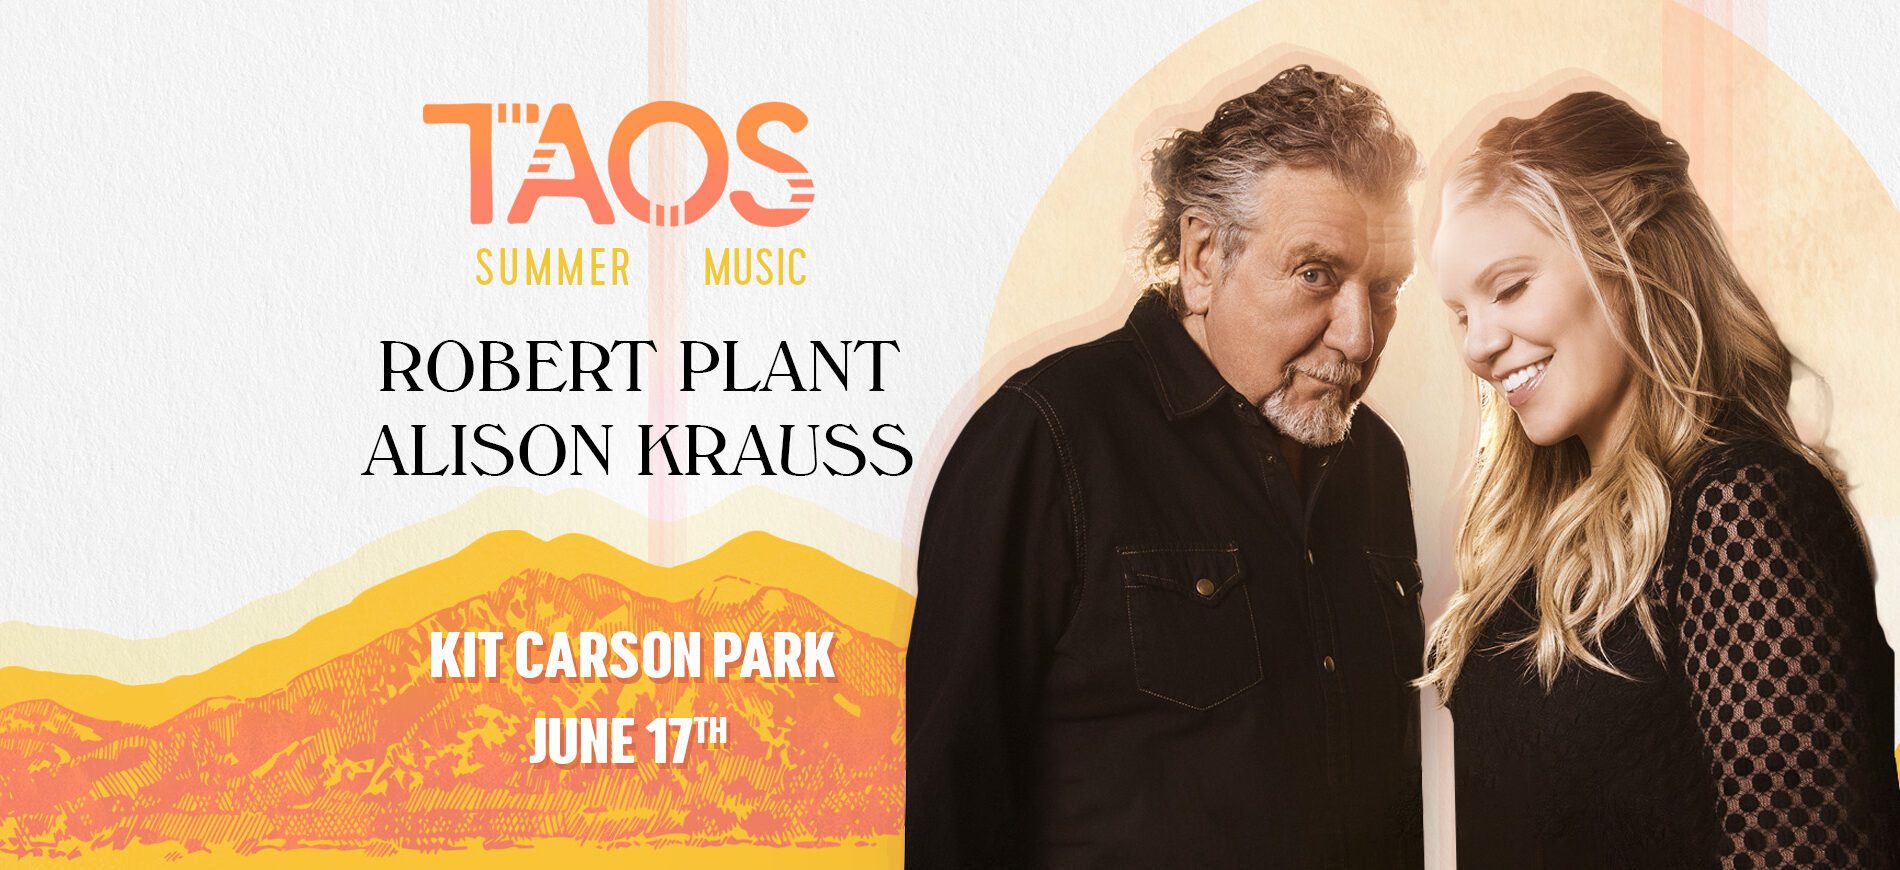 Robert Plant & Alison Krauss play in Taos NM